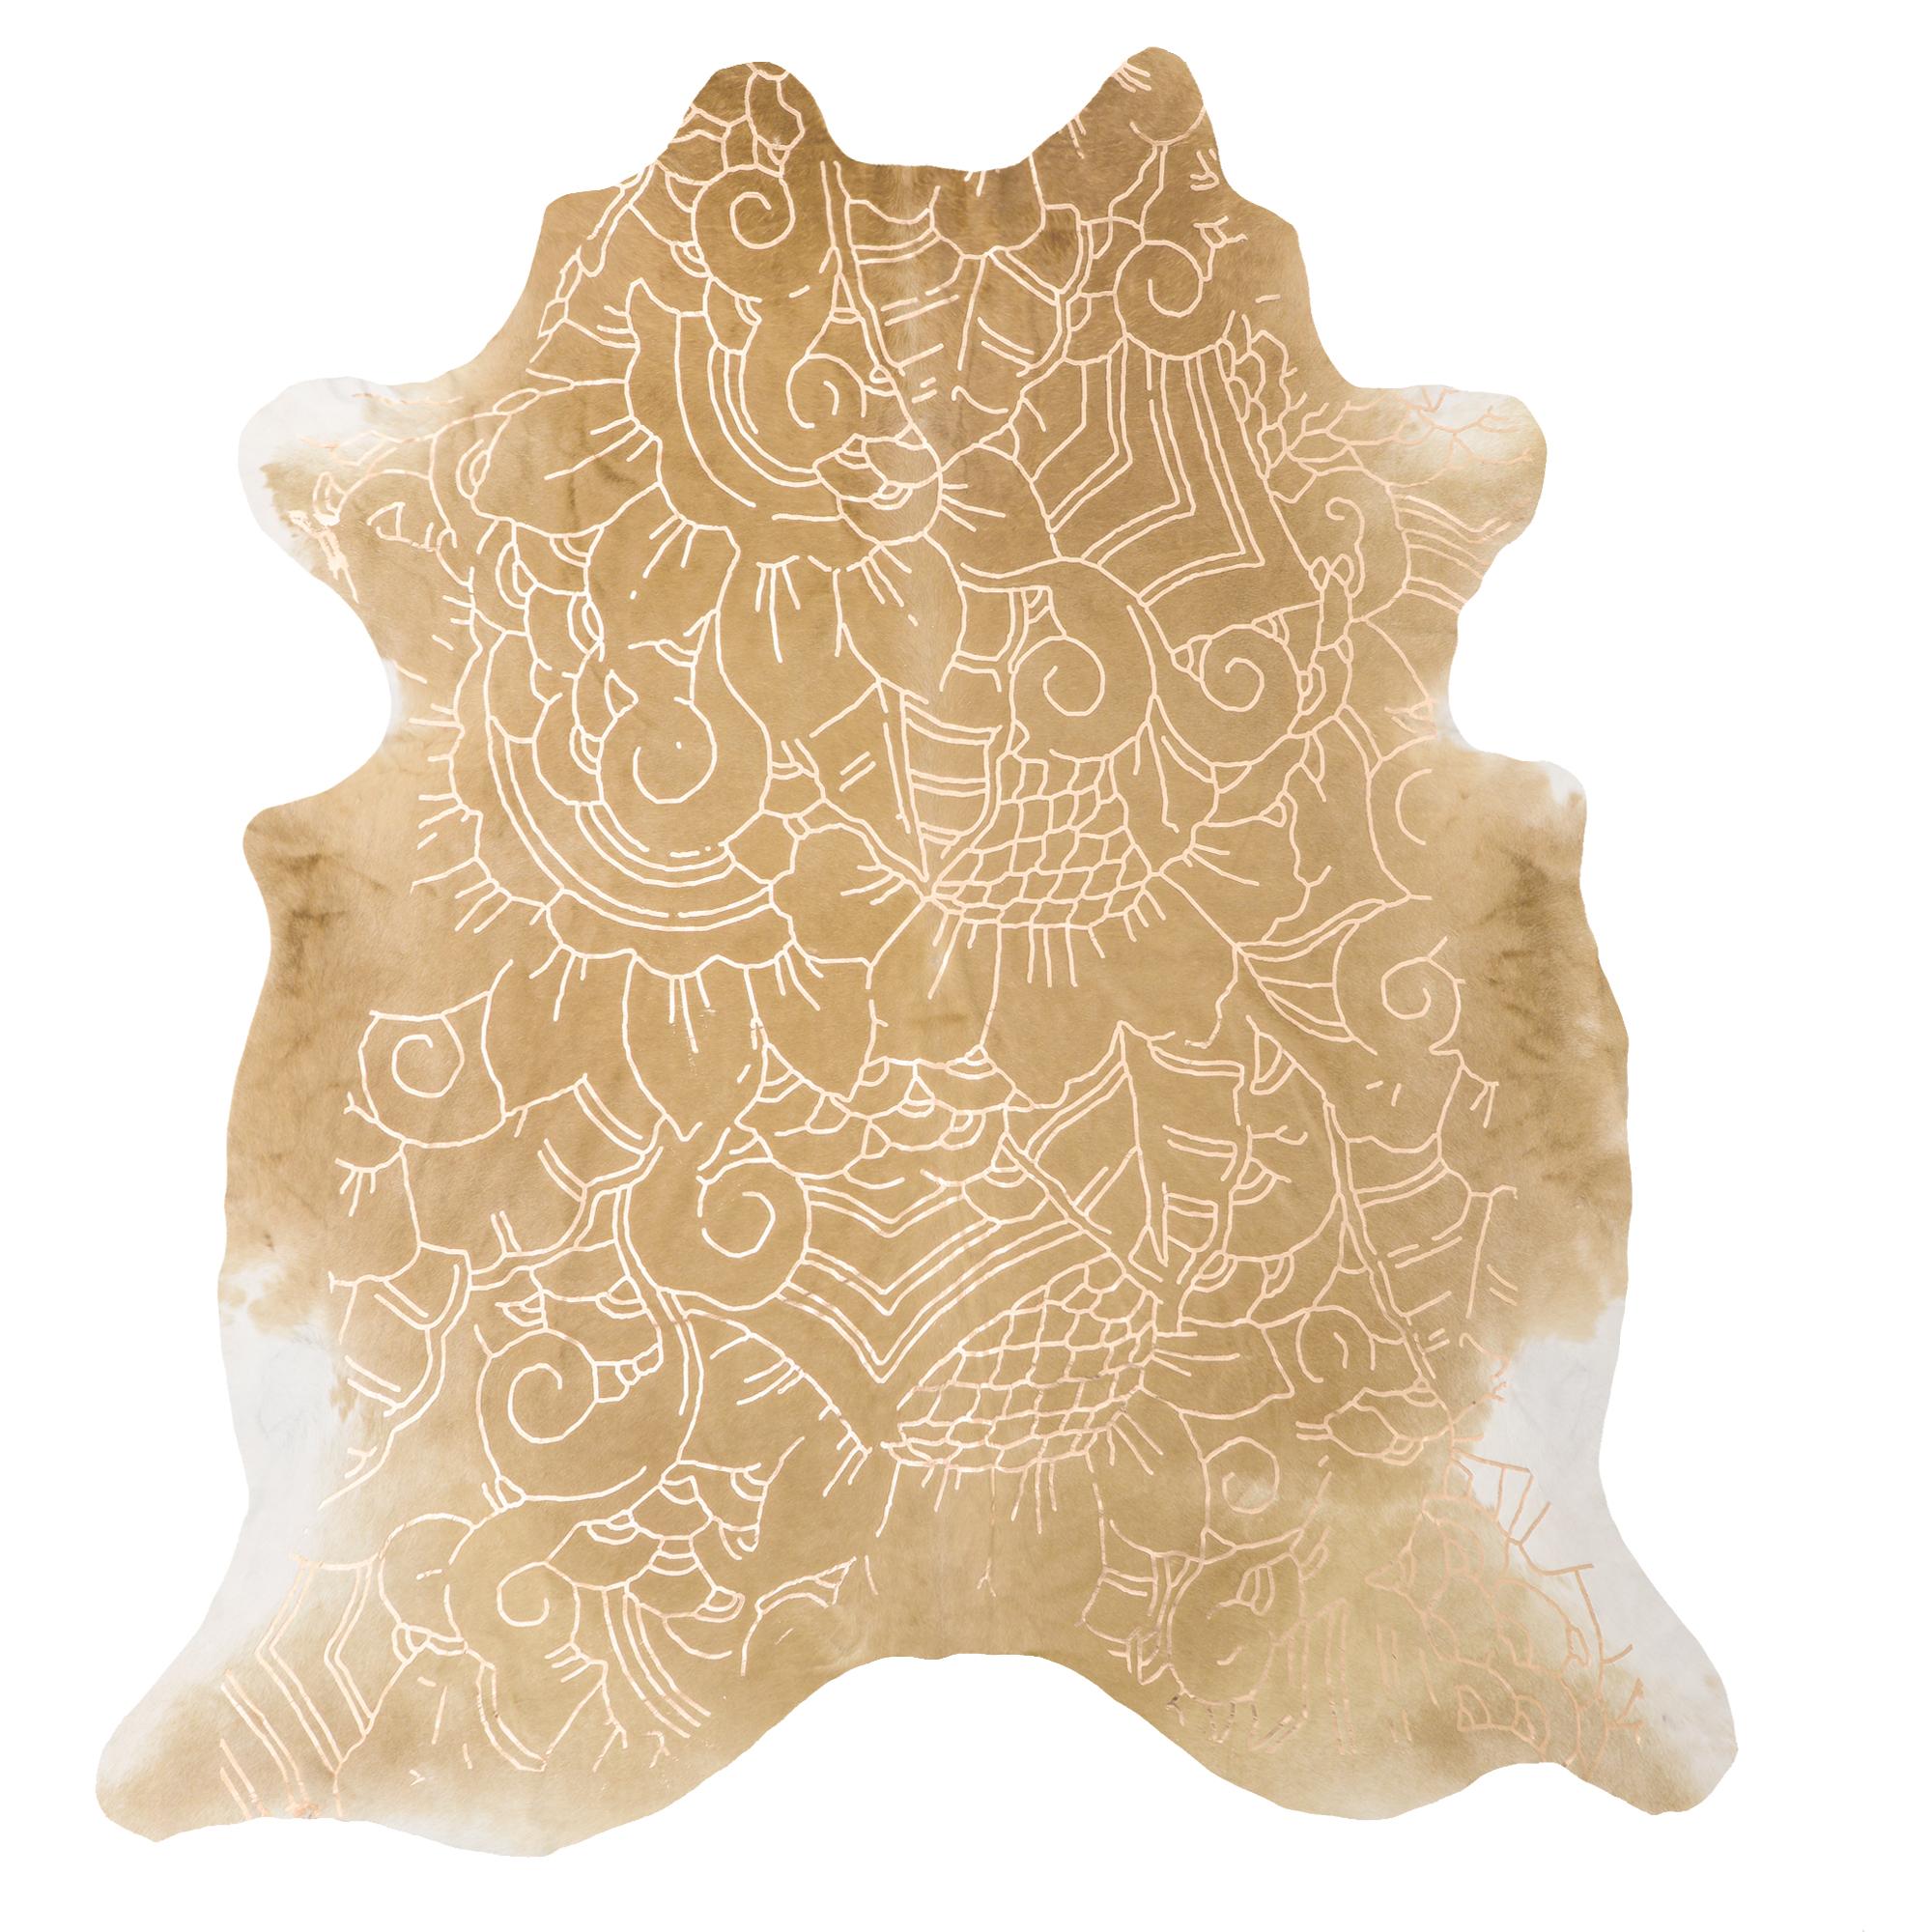 Indonesian Gold Metallic Boho Batik Pattern Caramel Cowhide Rug, Medium For Sale